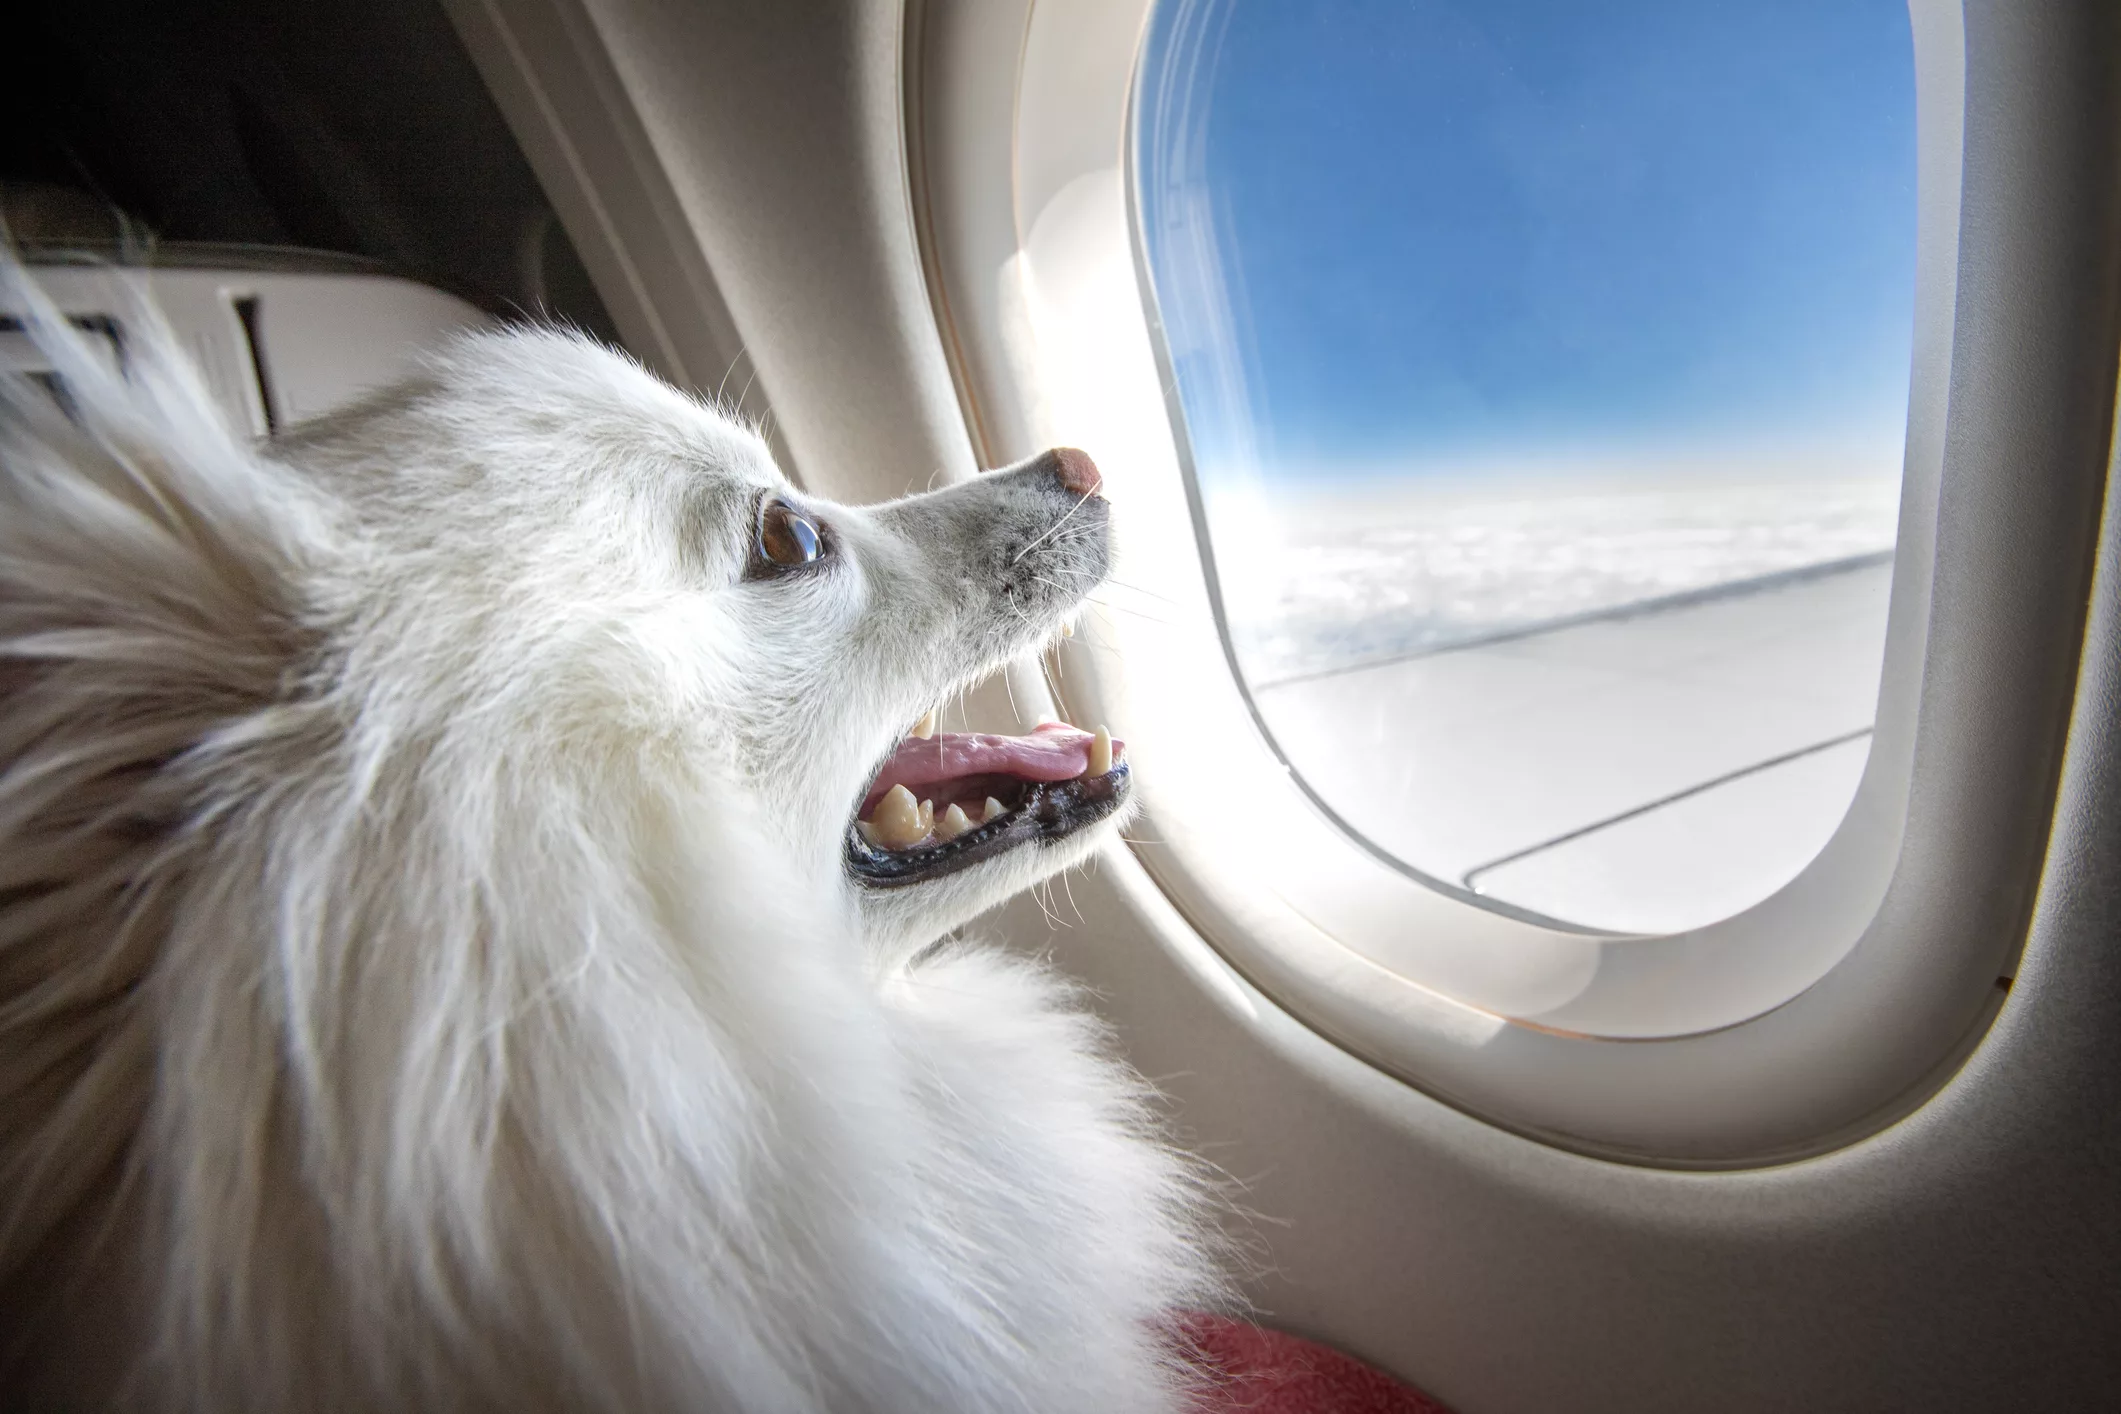 dog-on-an-airplane-2